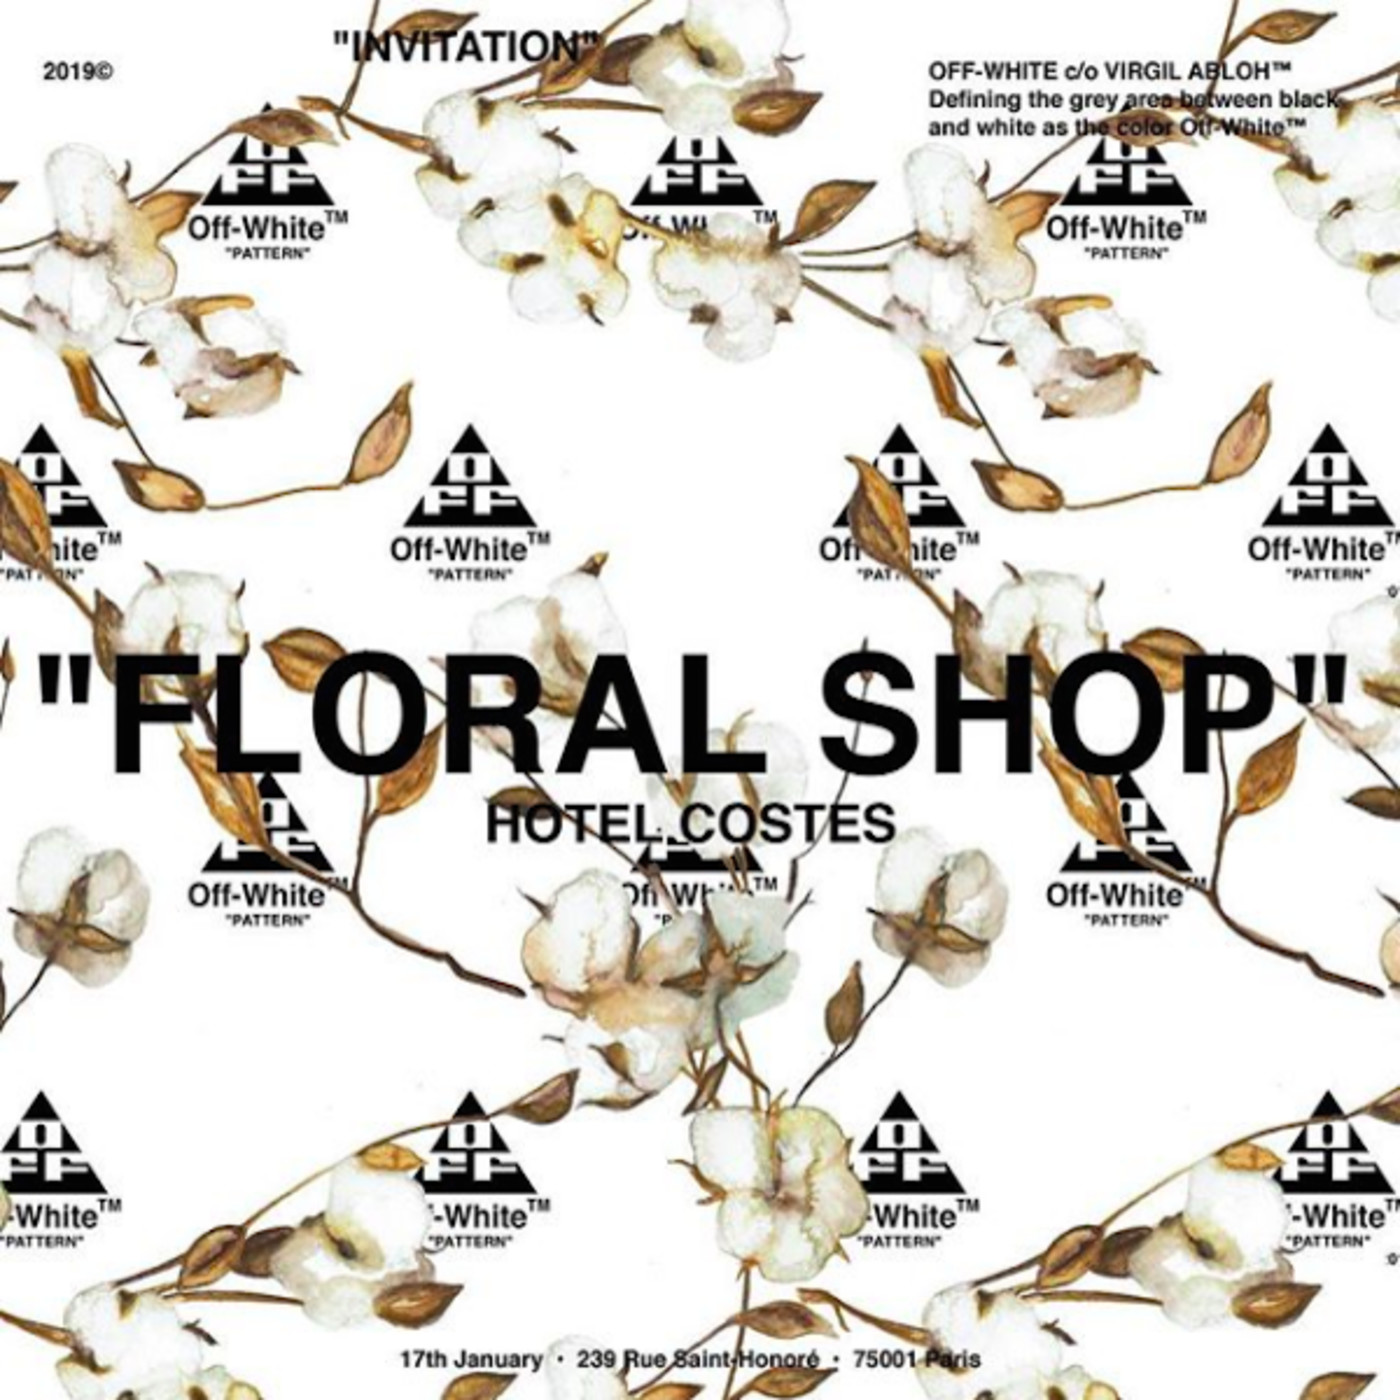 Virgil Abloh Debuts Off-White at “Floral Shop” | Complex